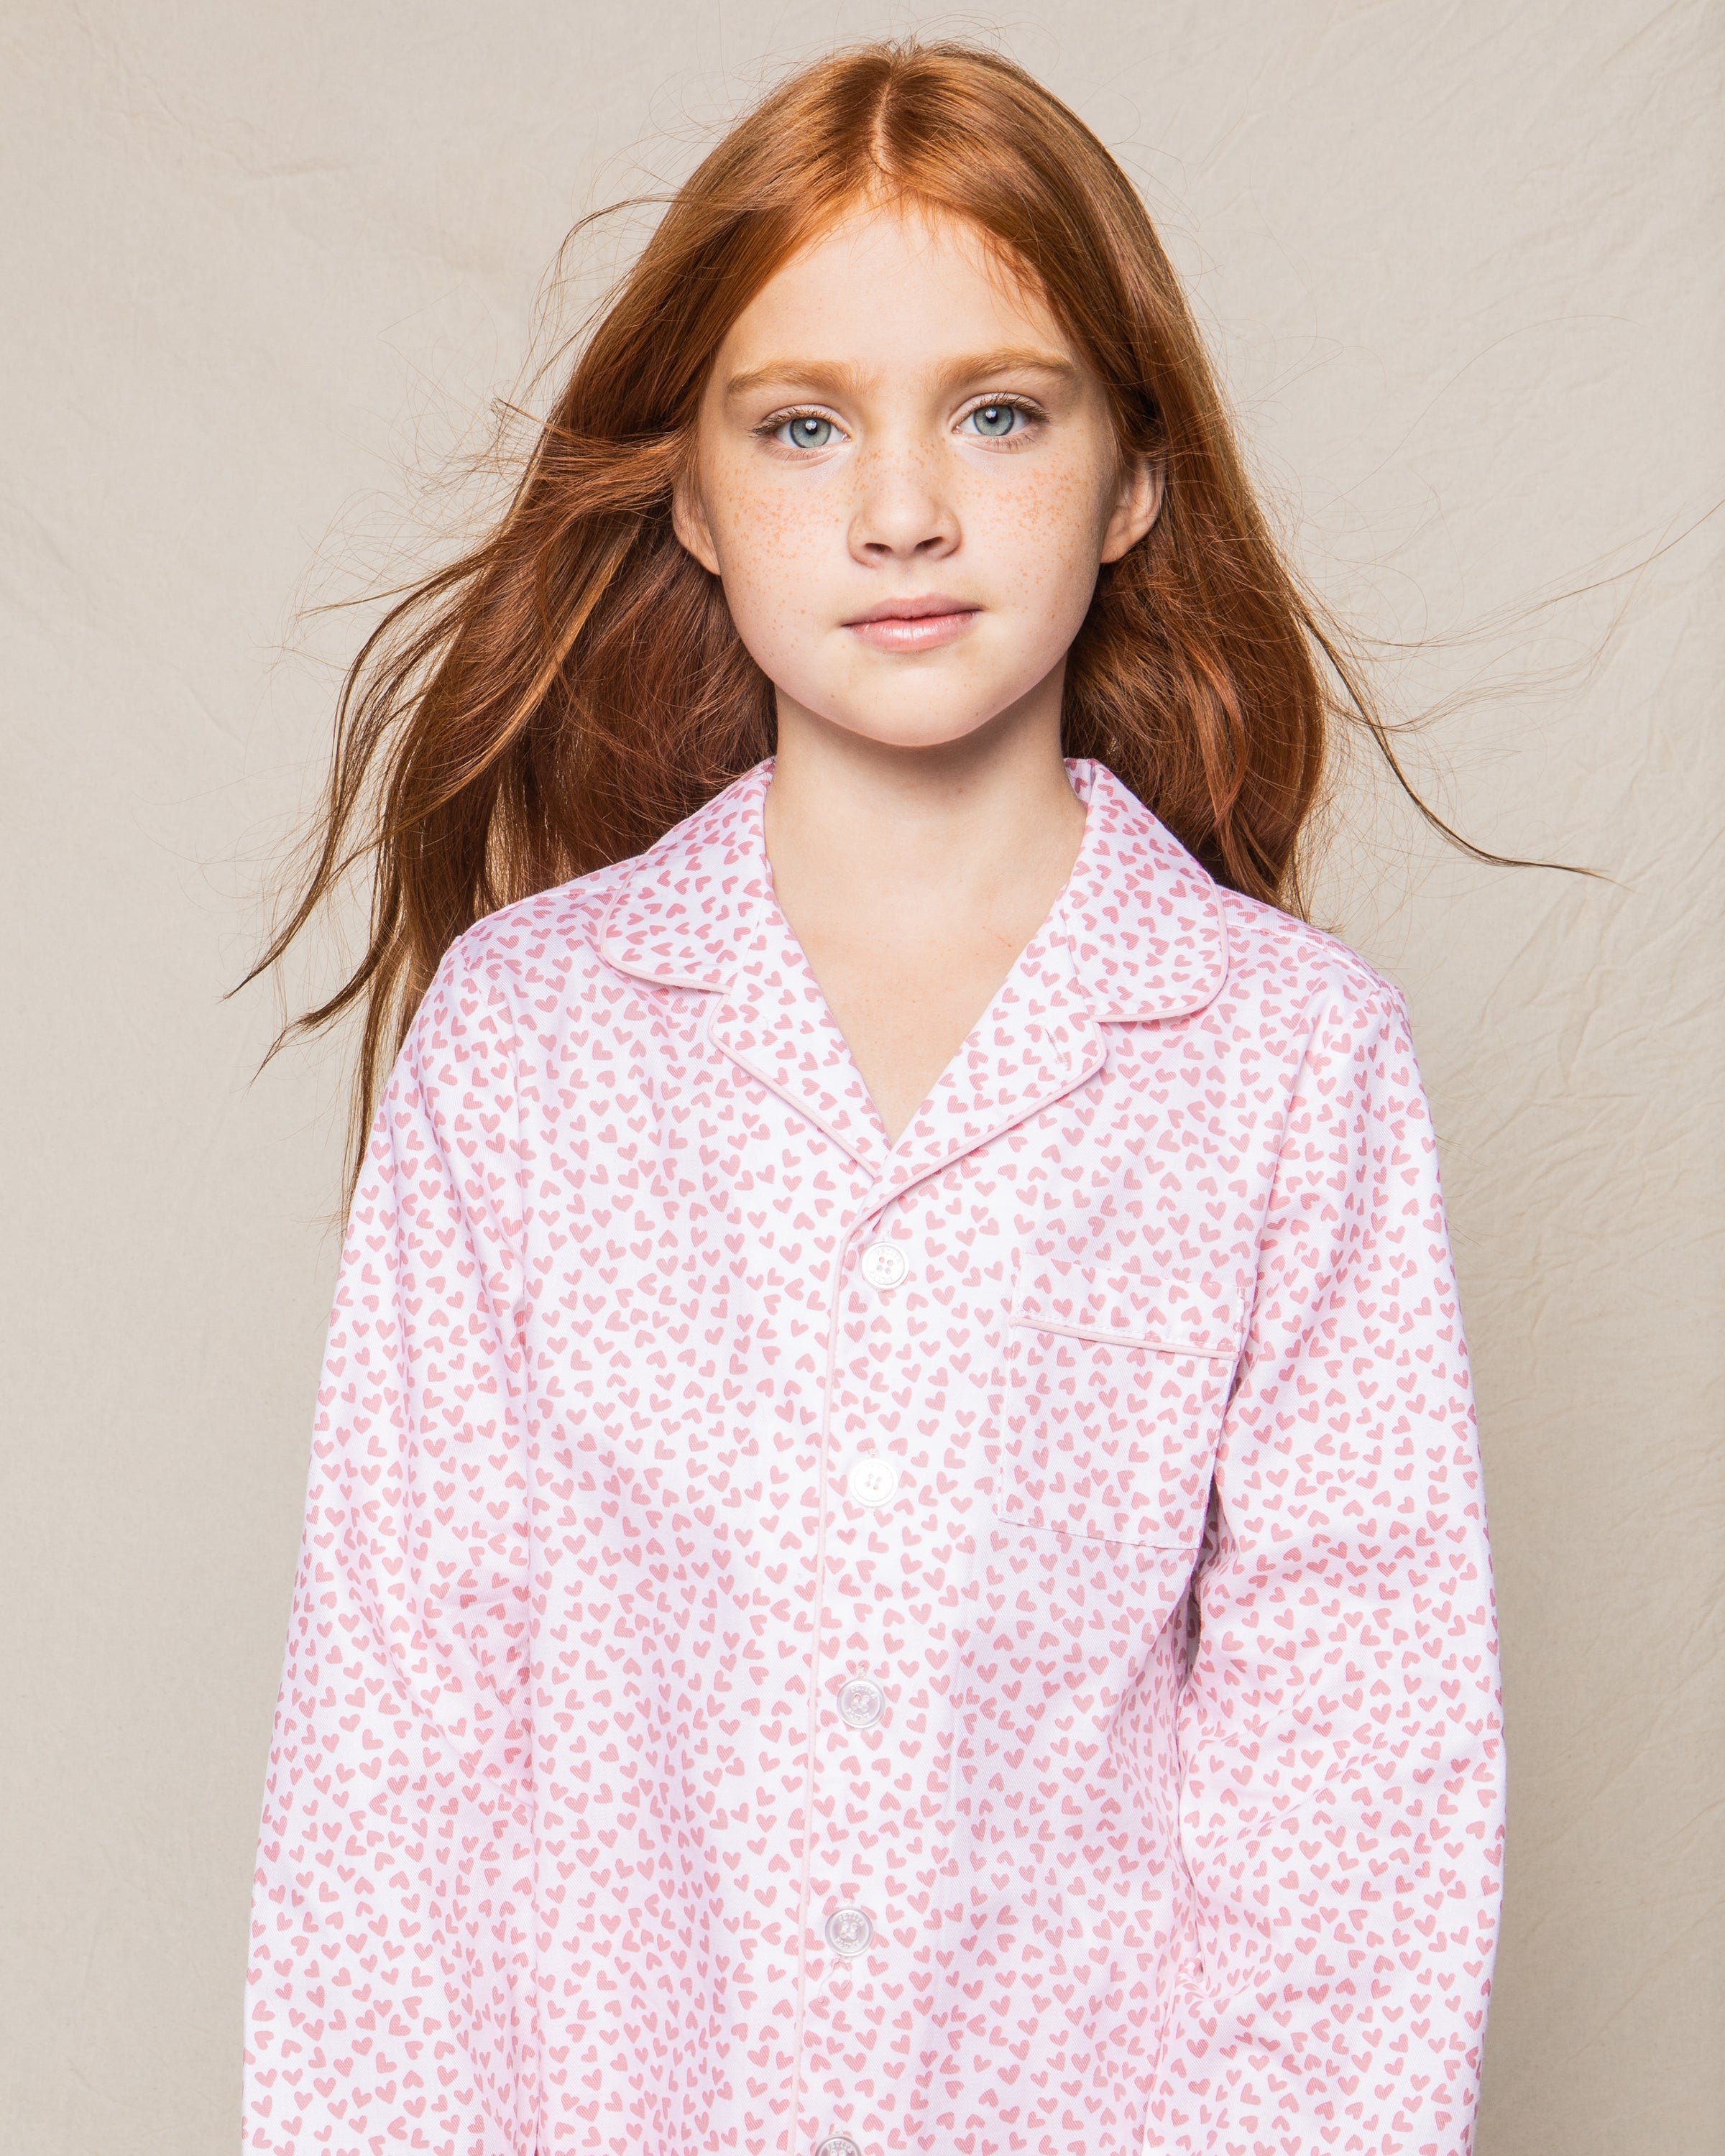 Women's Silk Pajama Set in Pink Stripe